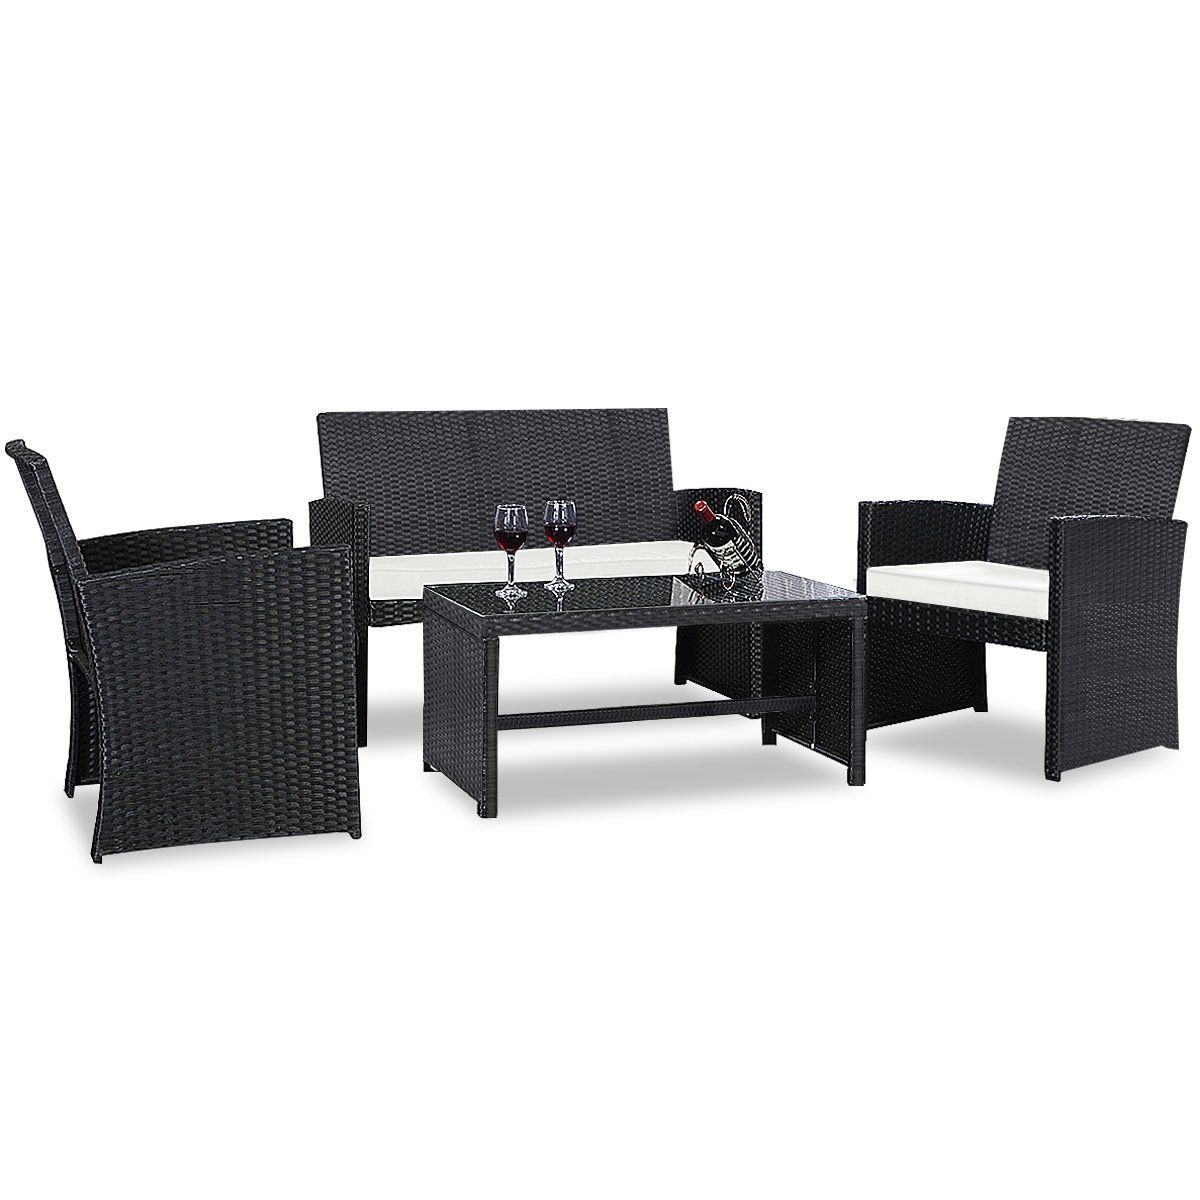 4 Piece Outdoor Patio Rattan Furniture Set Black Wicker Cushioned Seat For Garden, porch, Lawn | Walmart (US)